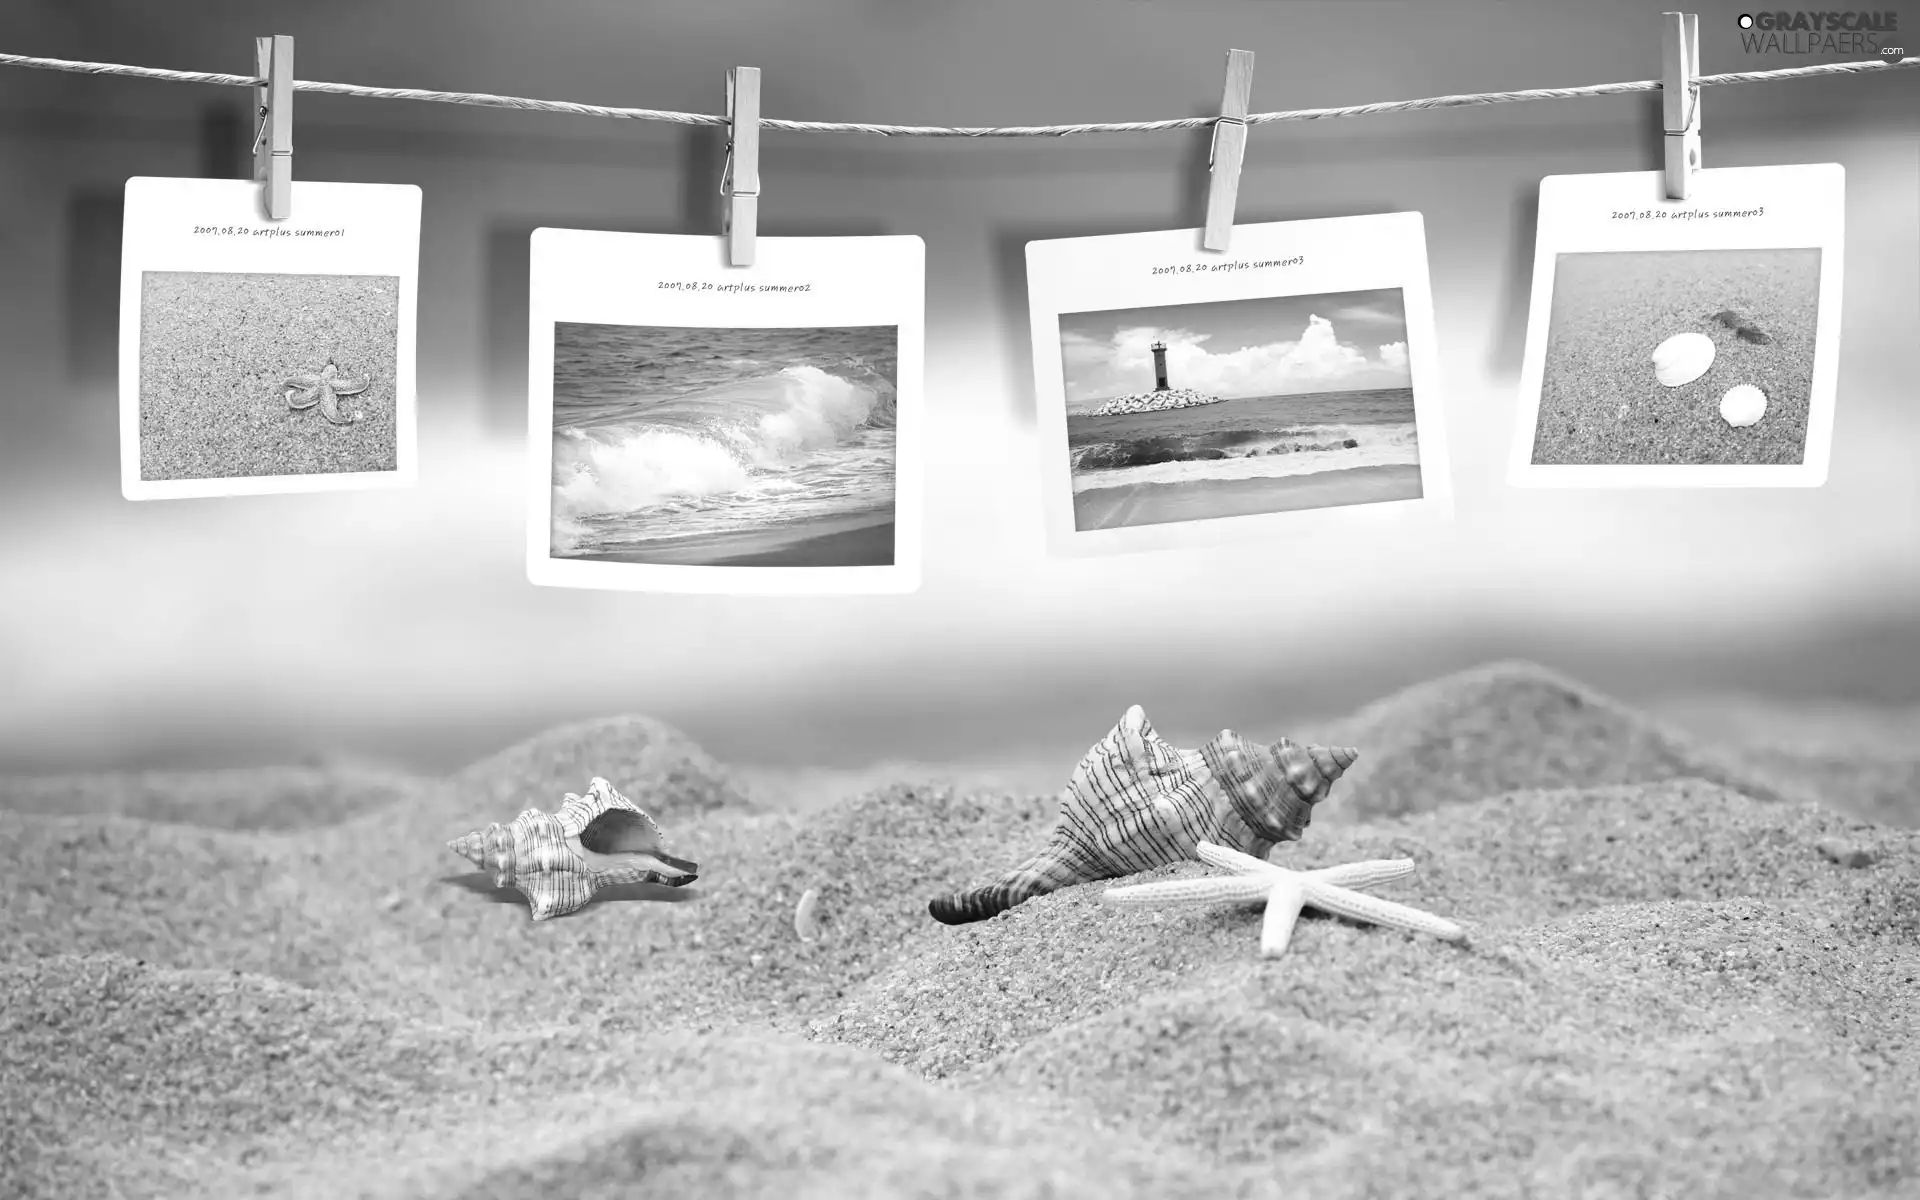 Beaches, Sand, postcards, Shells